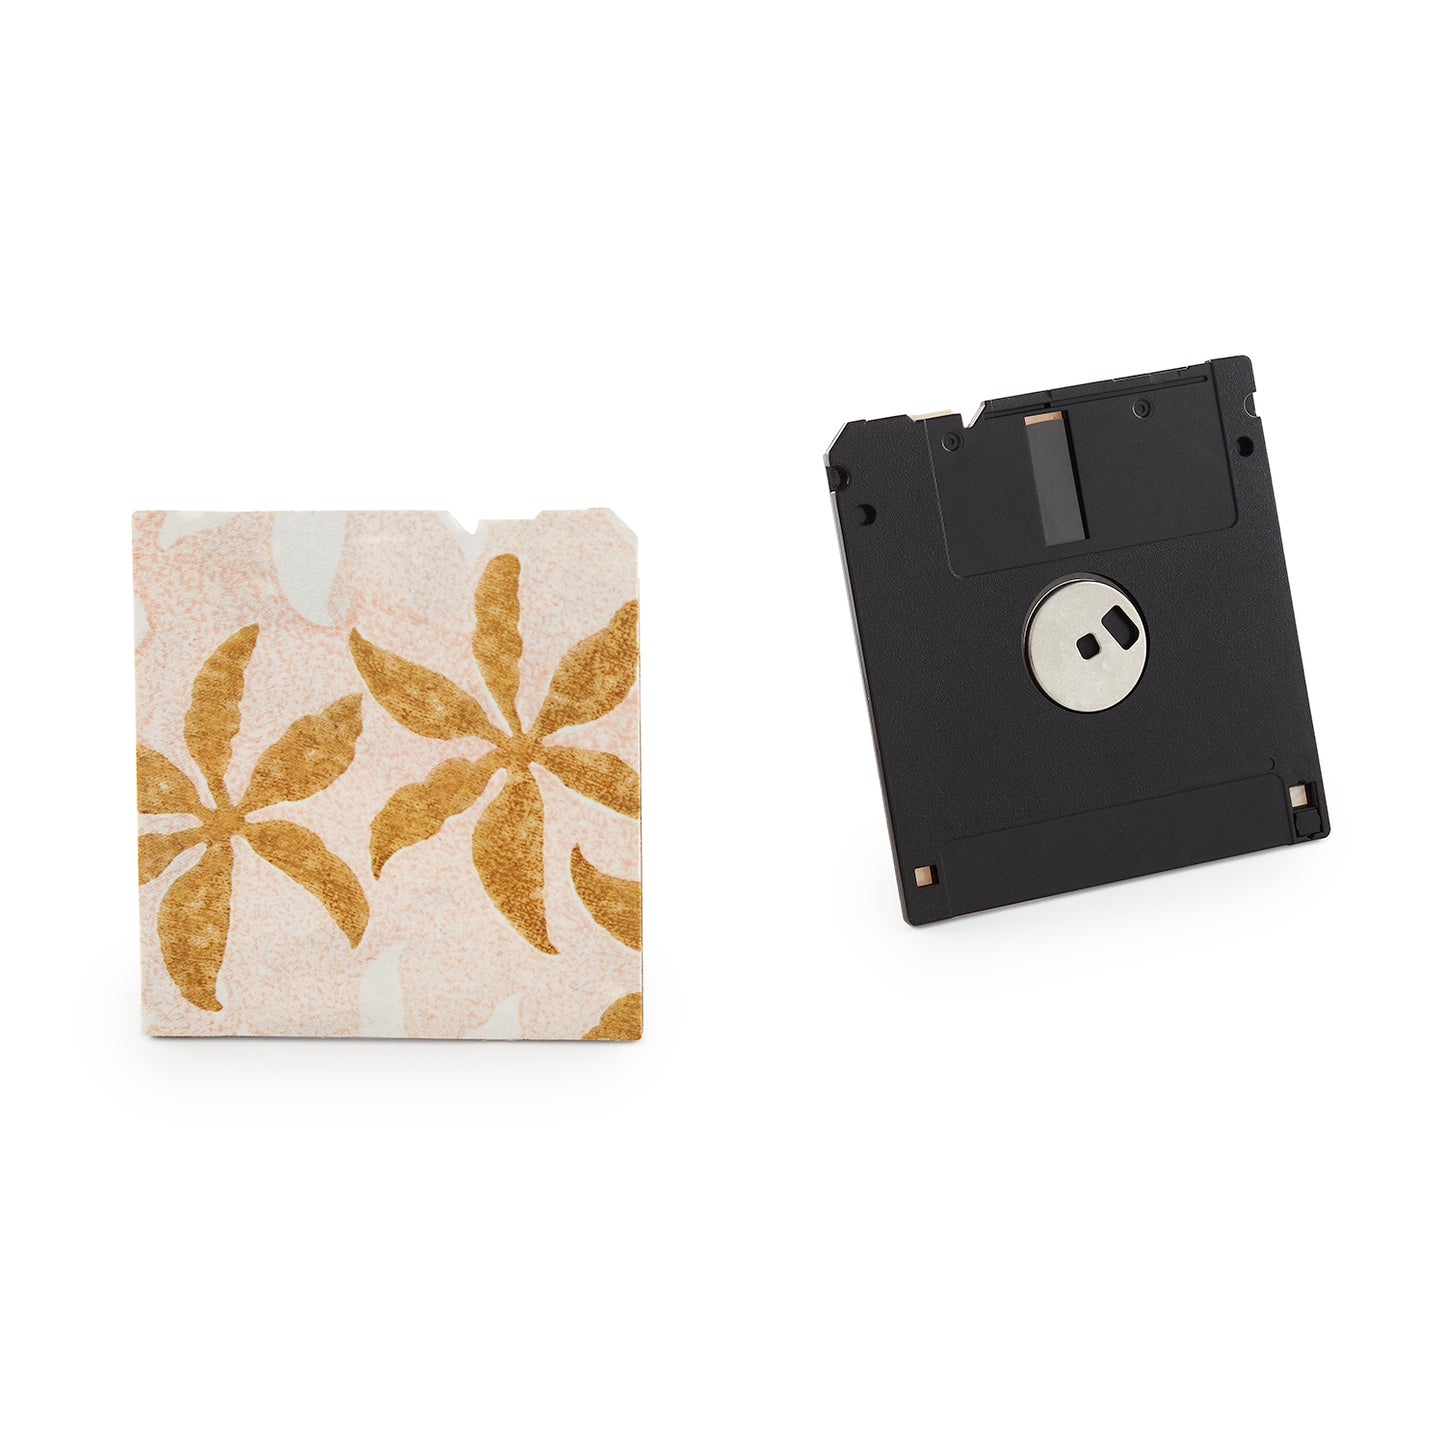 Almond Brown - Floppy Disk Coaster set of 2